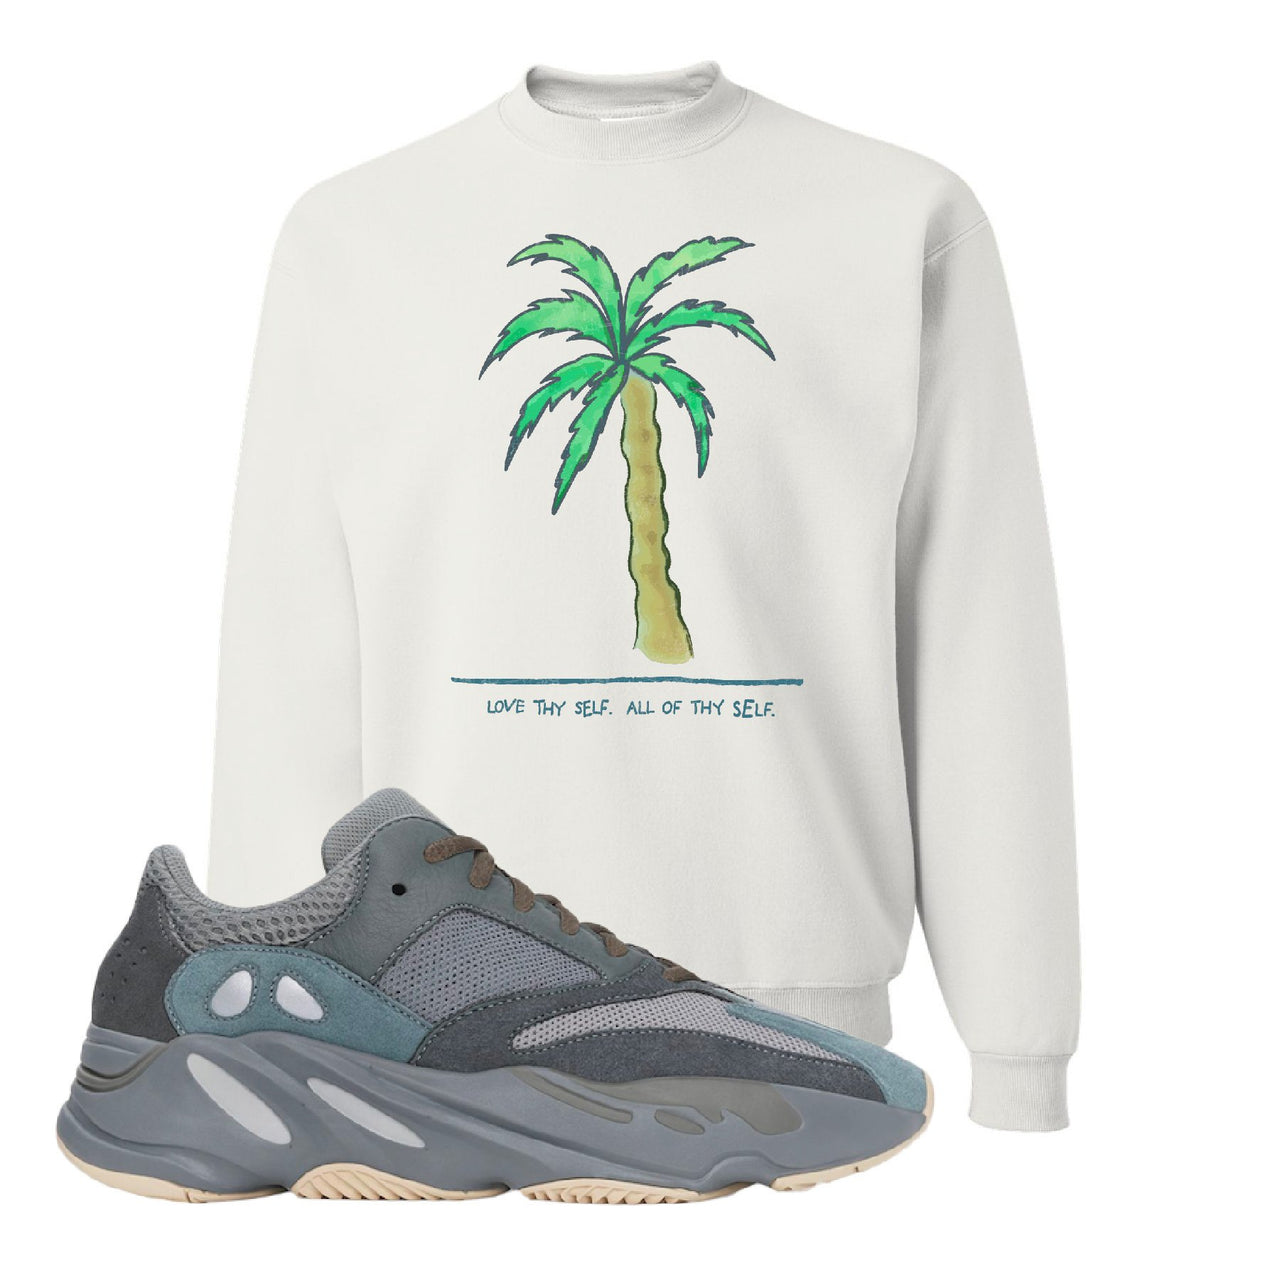 Yeezy Boost 700 Teal Blue Love Thyself Palm White Sneaker Hook Up Crewneck Sweatshirt